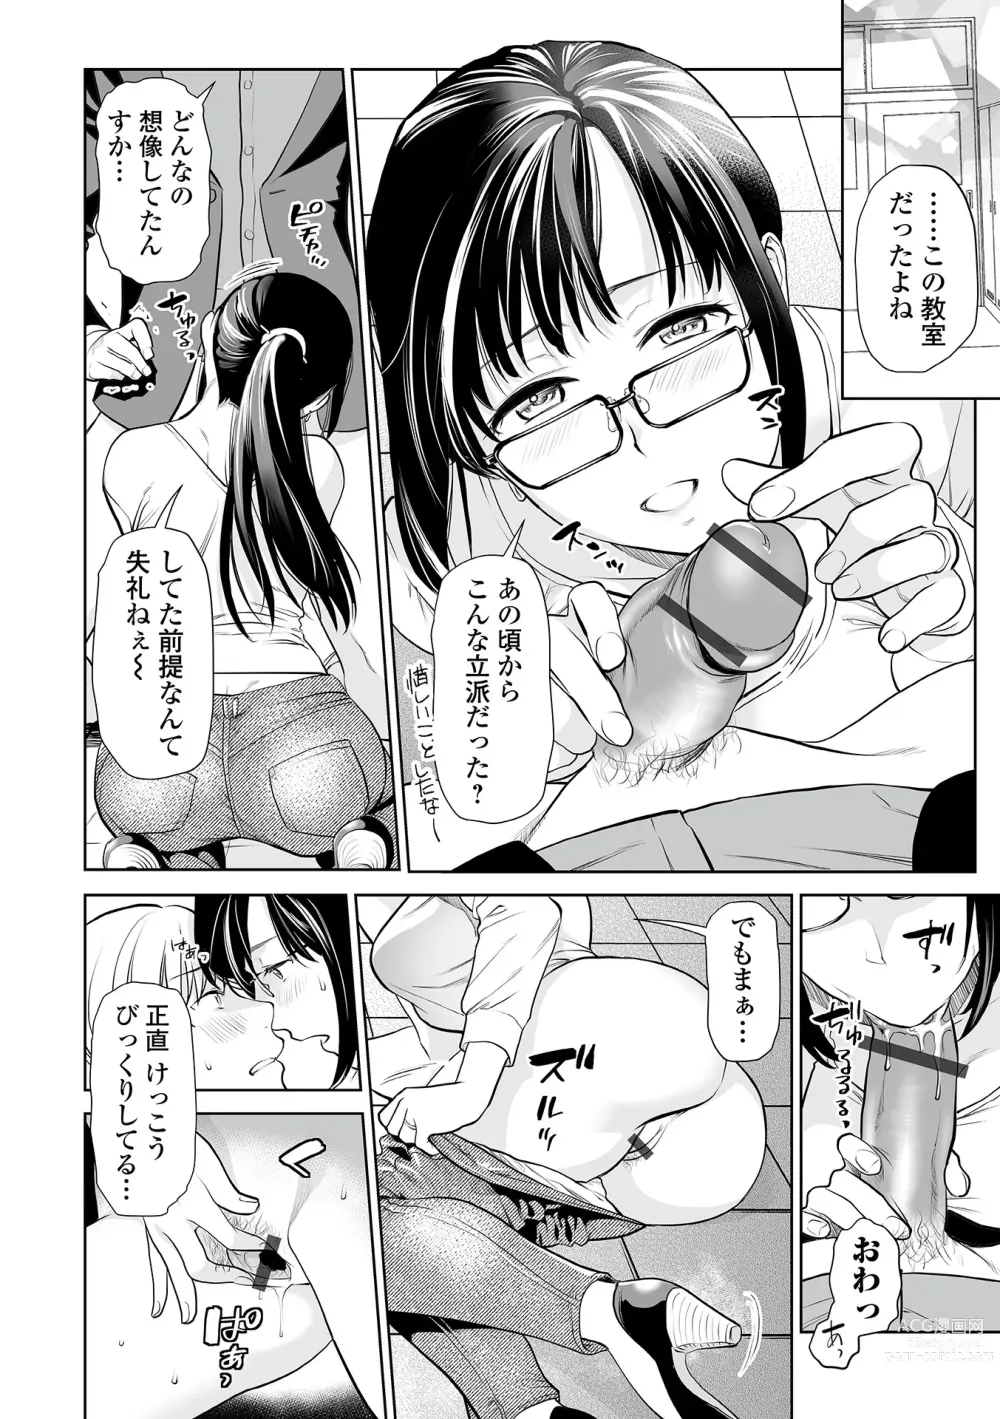 Page 8 of manga Web Comic Toutetsu Vol. 87